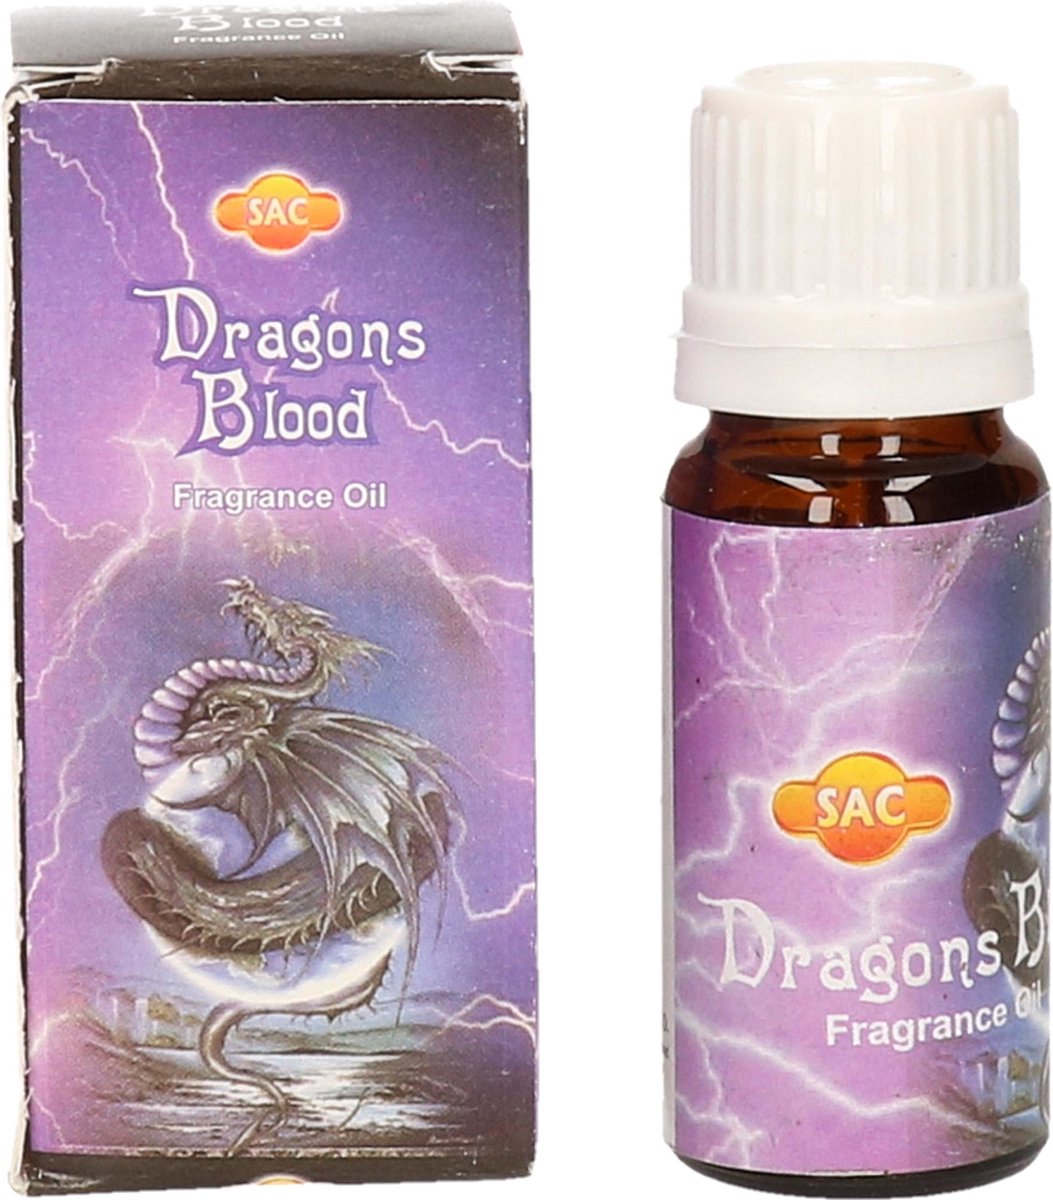 SAC Dragons Blood Fragrance Oil